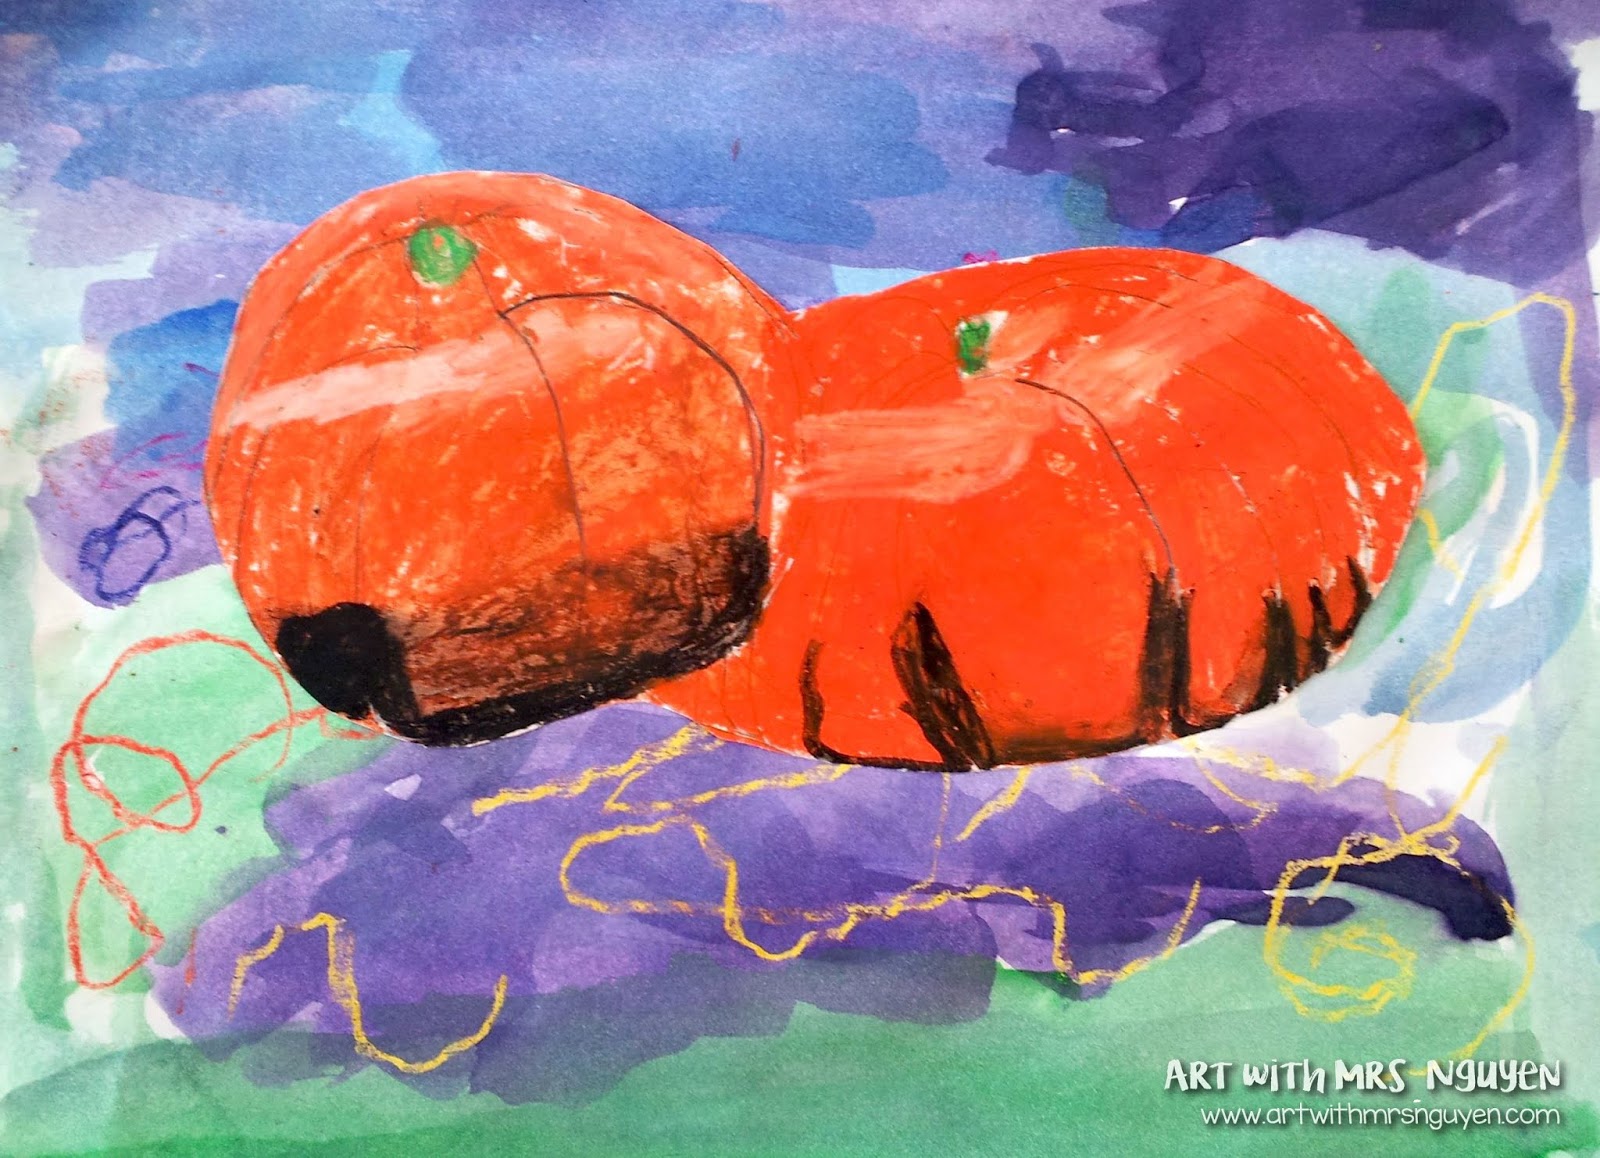 Pumpkin Art Project With Chalk Pastels - The Kindergarten Connection